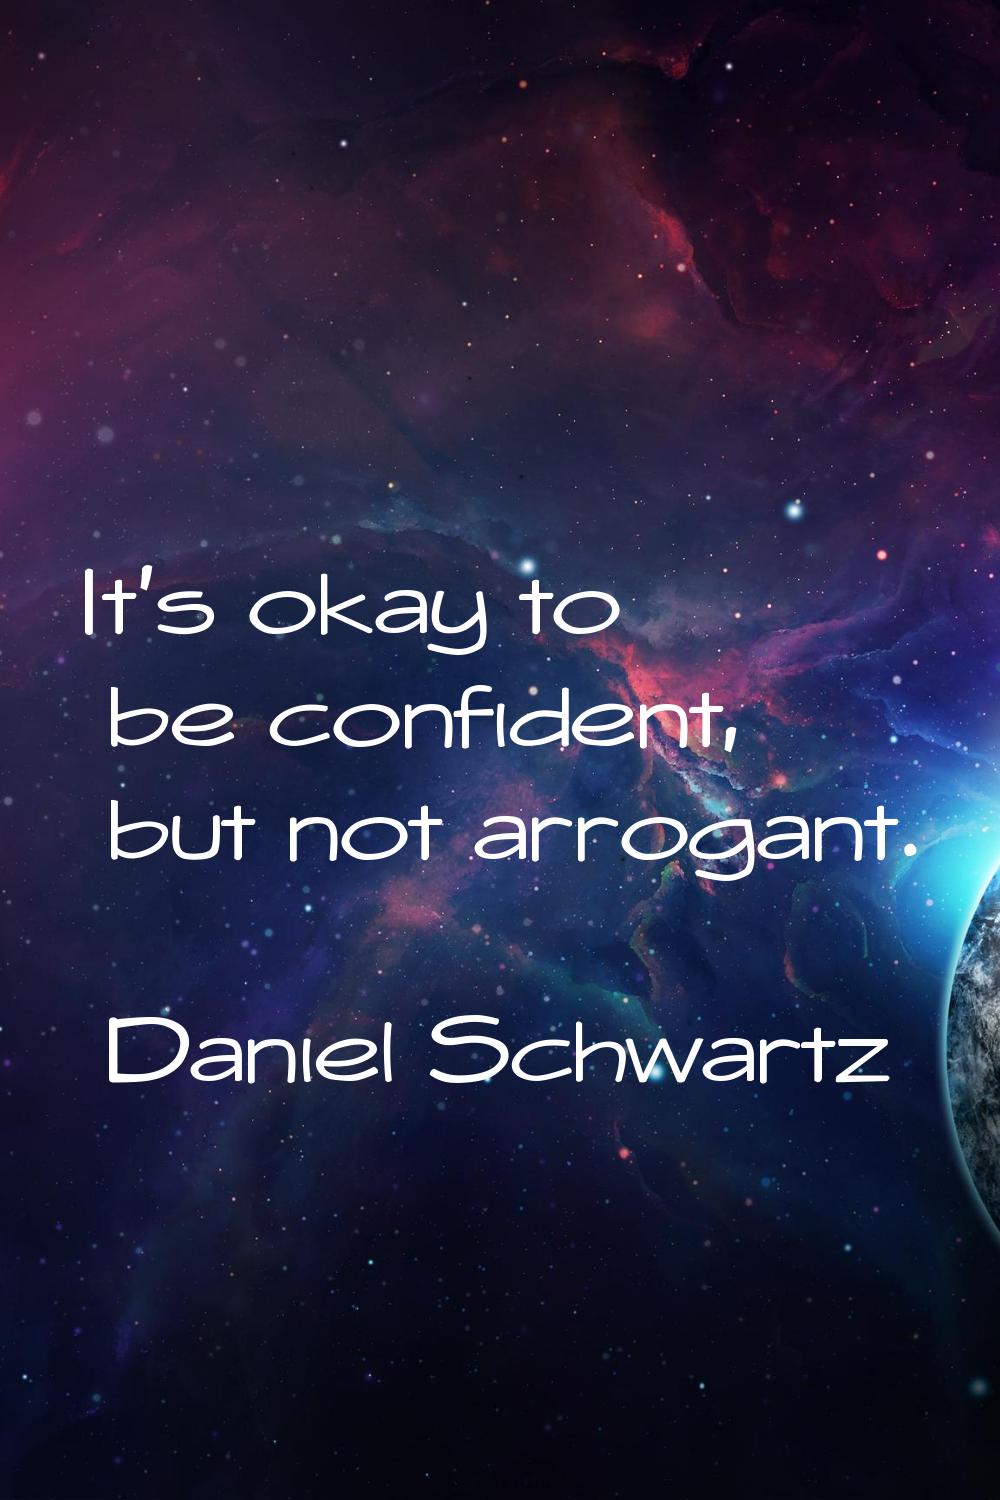 It's okay to be confident, but not arrogant.